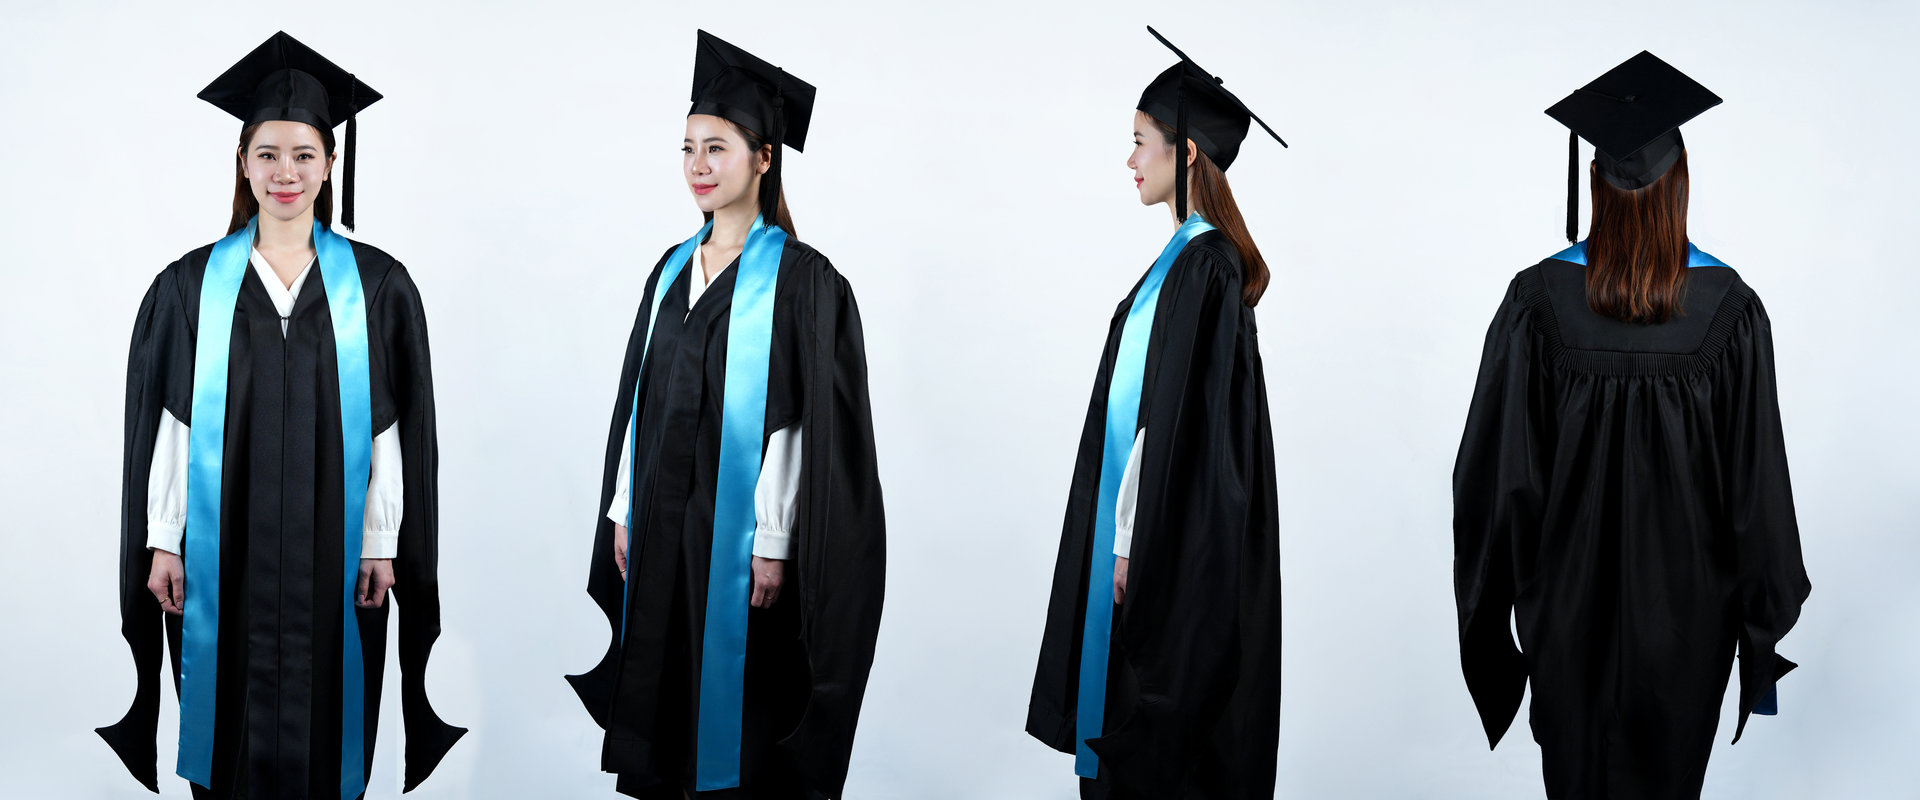 Postgraduate Certificate in Laws / Postgraduate Certificate 360° Dress Demo